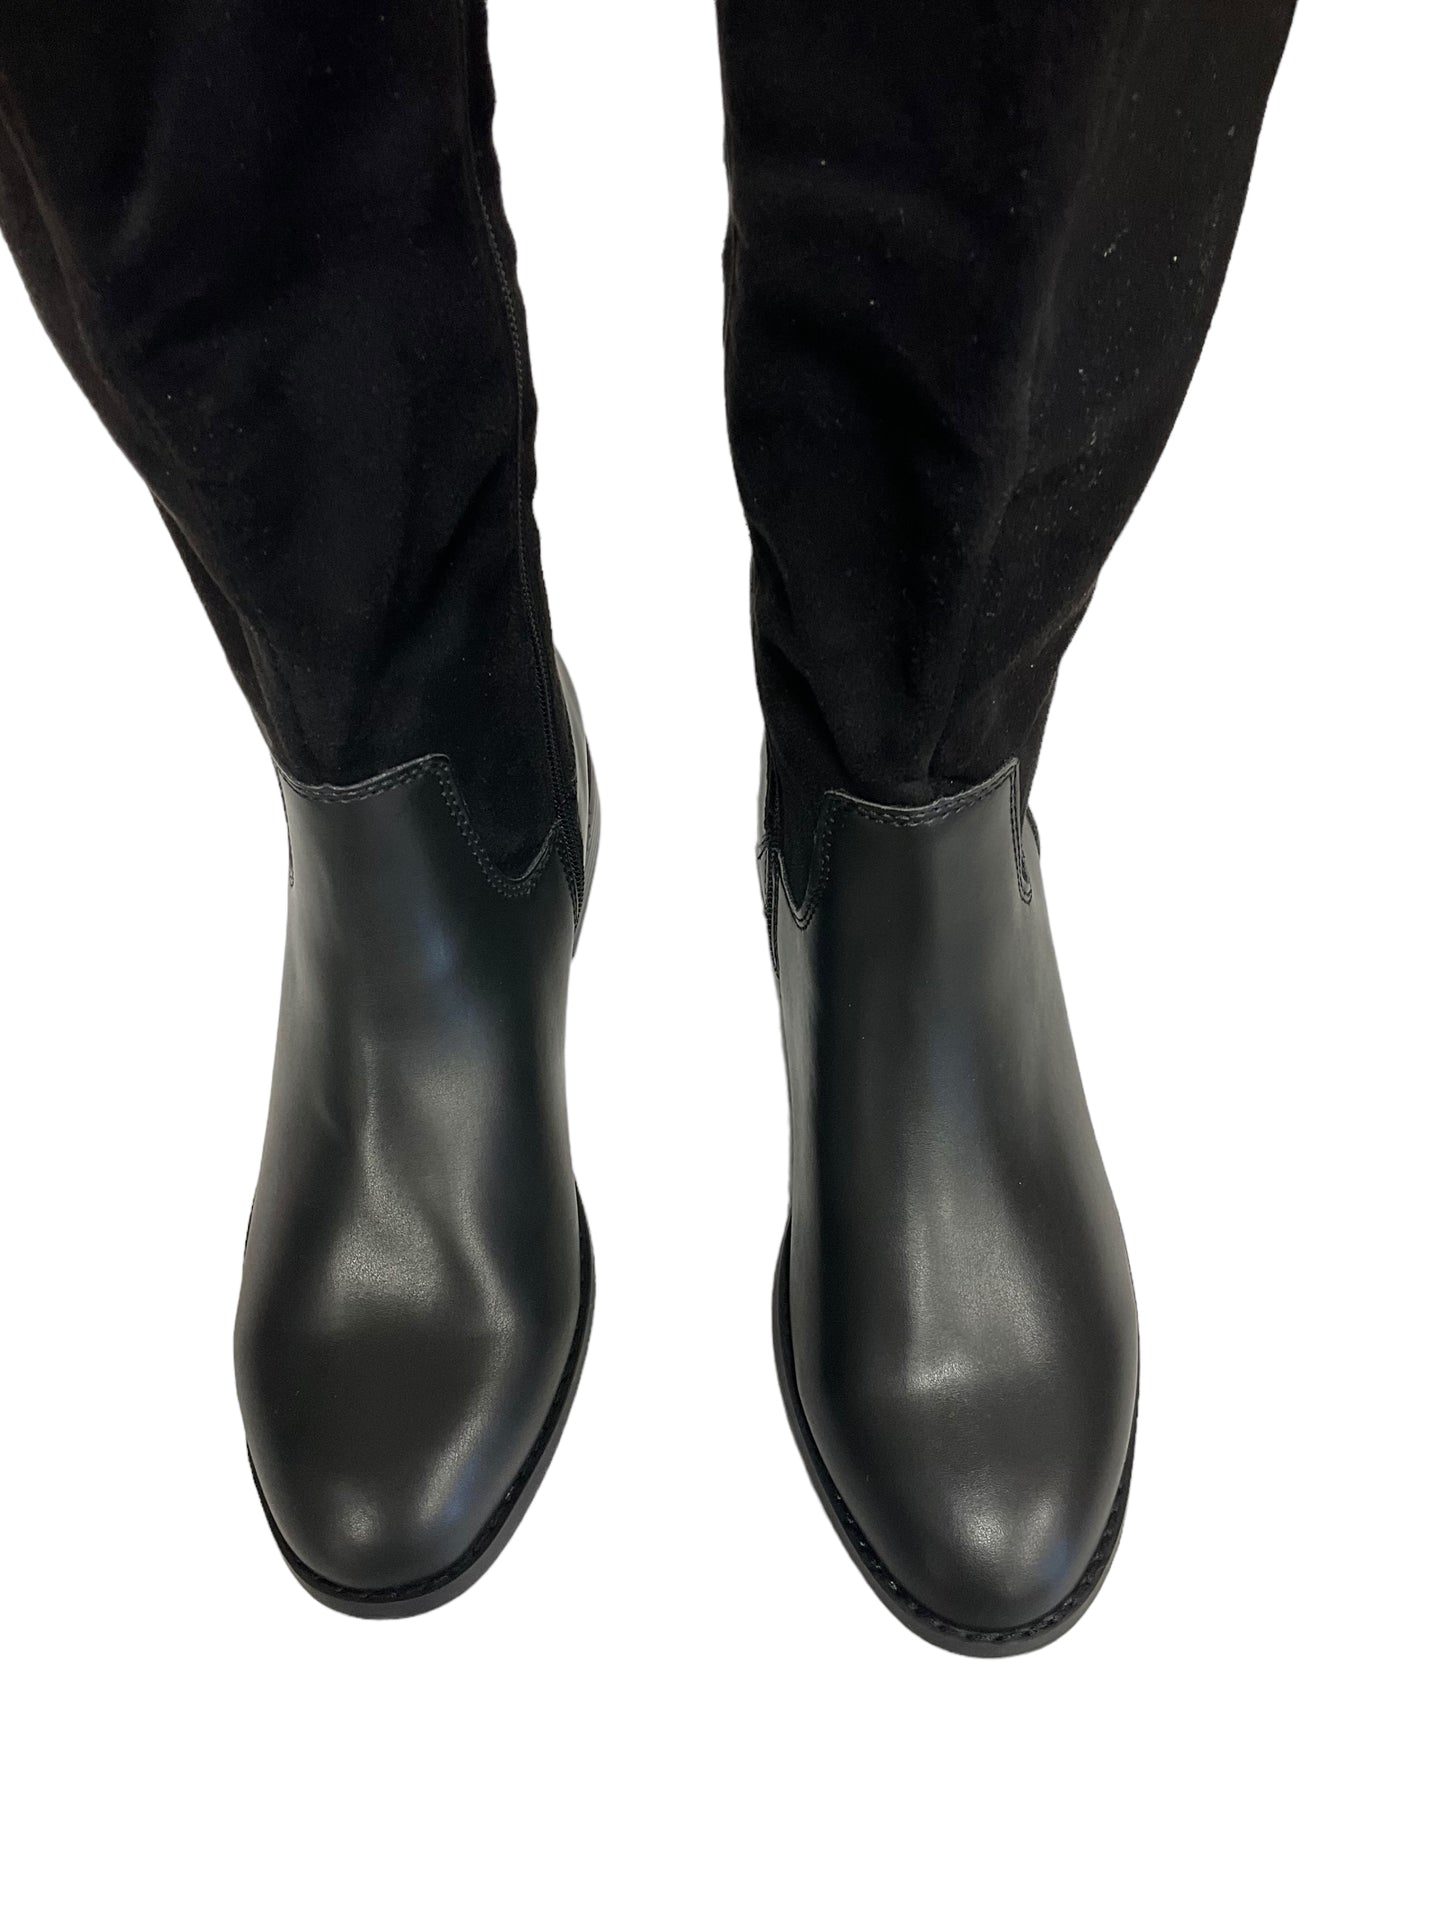 Boots Knee Flats By Liz Claiborne  Size: 6